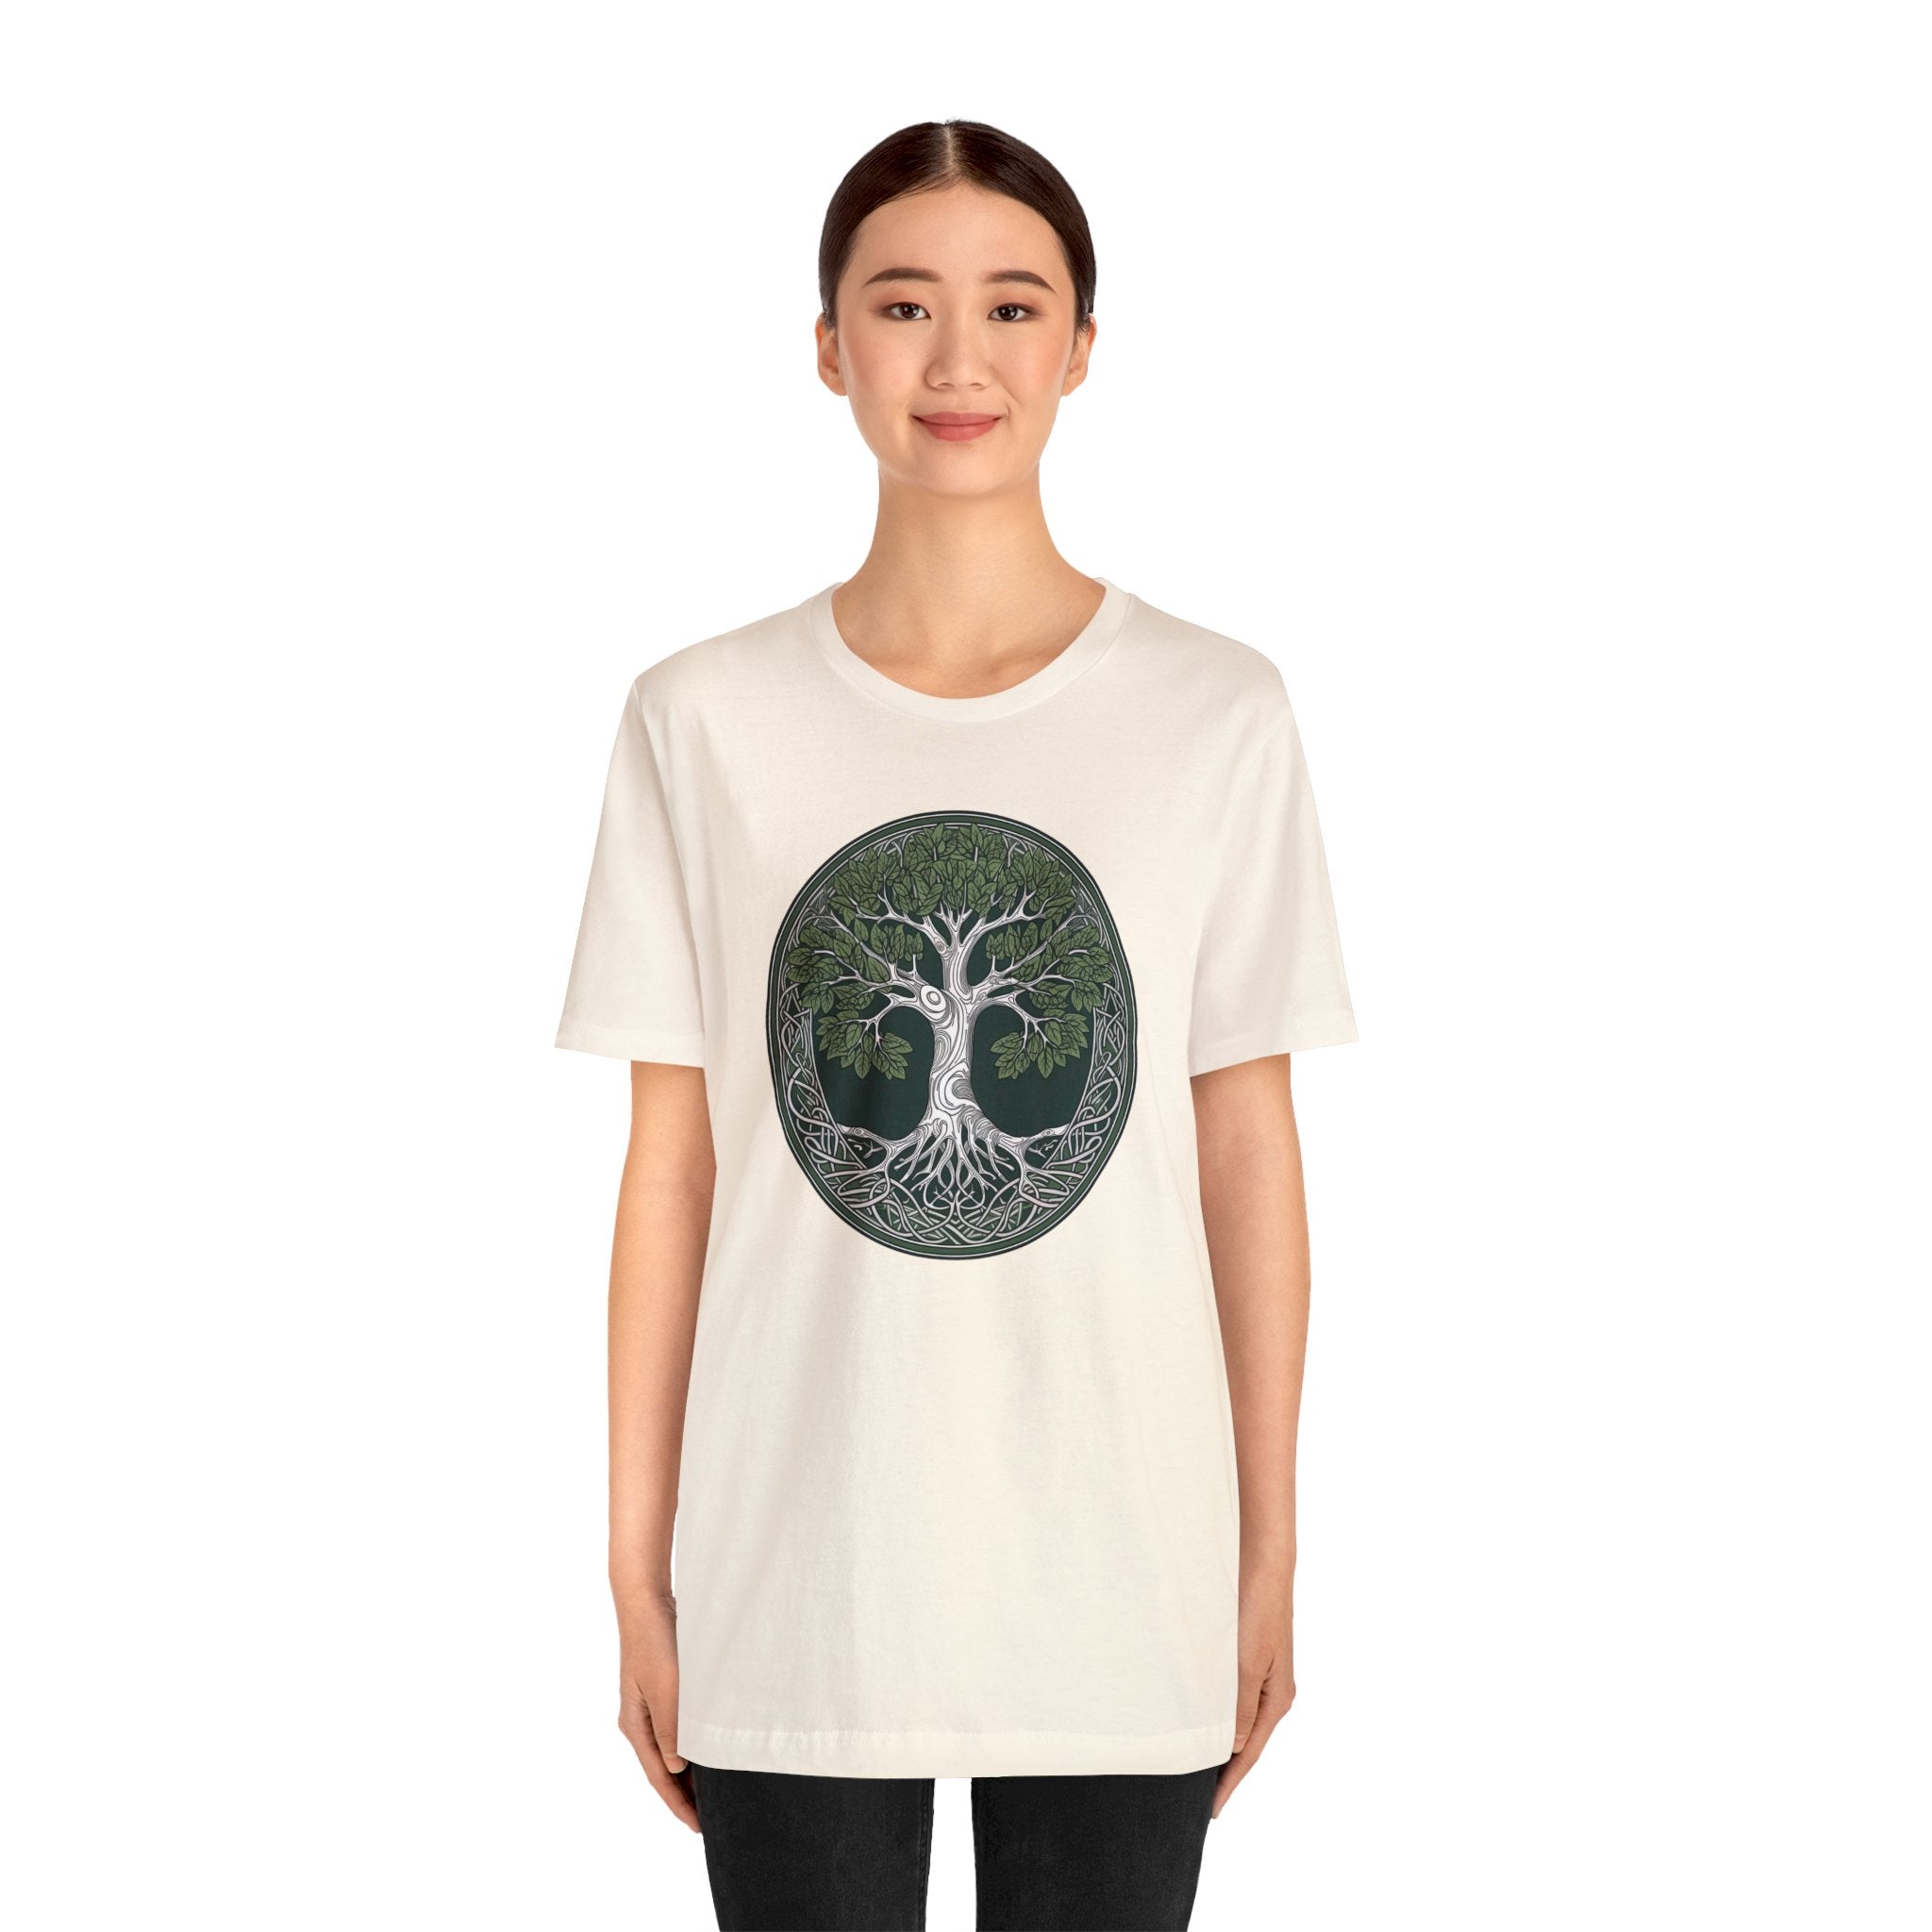 Elven Whispering Tree Tee | Woman's Regular Fit | Fantasy Elven Inspired Tee